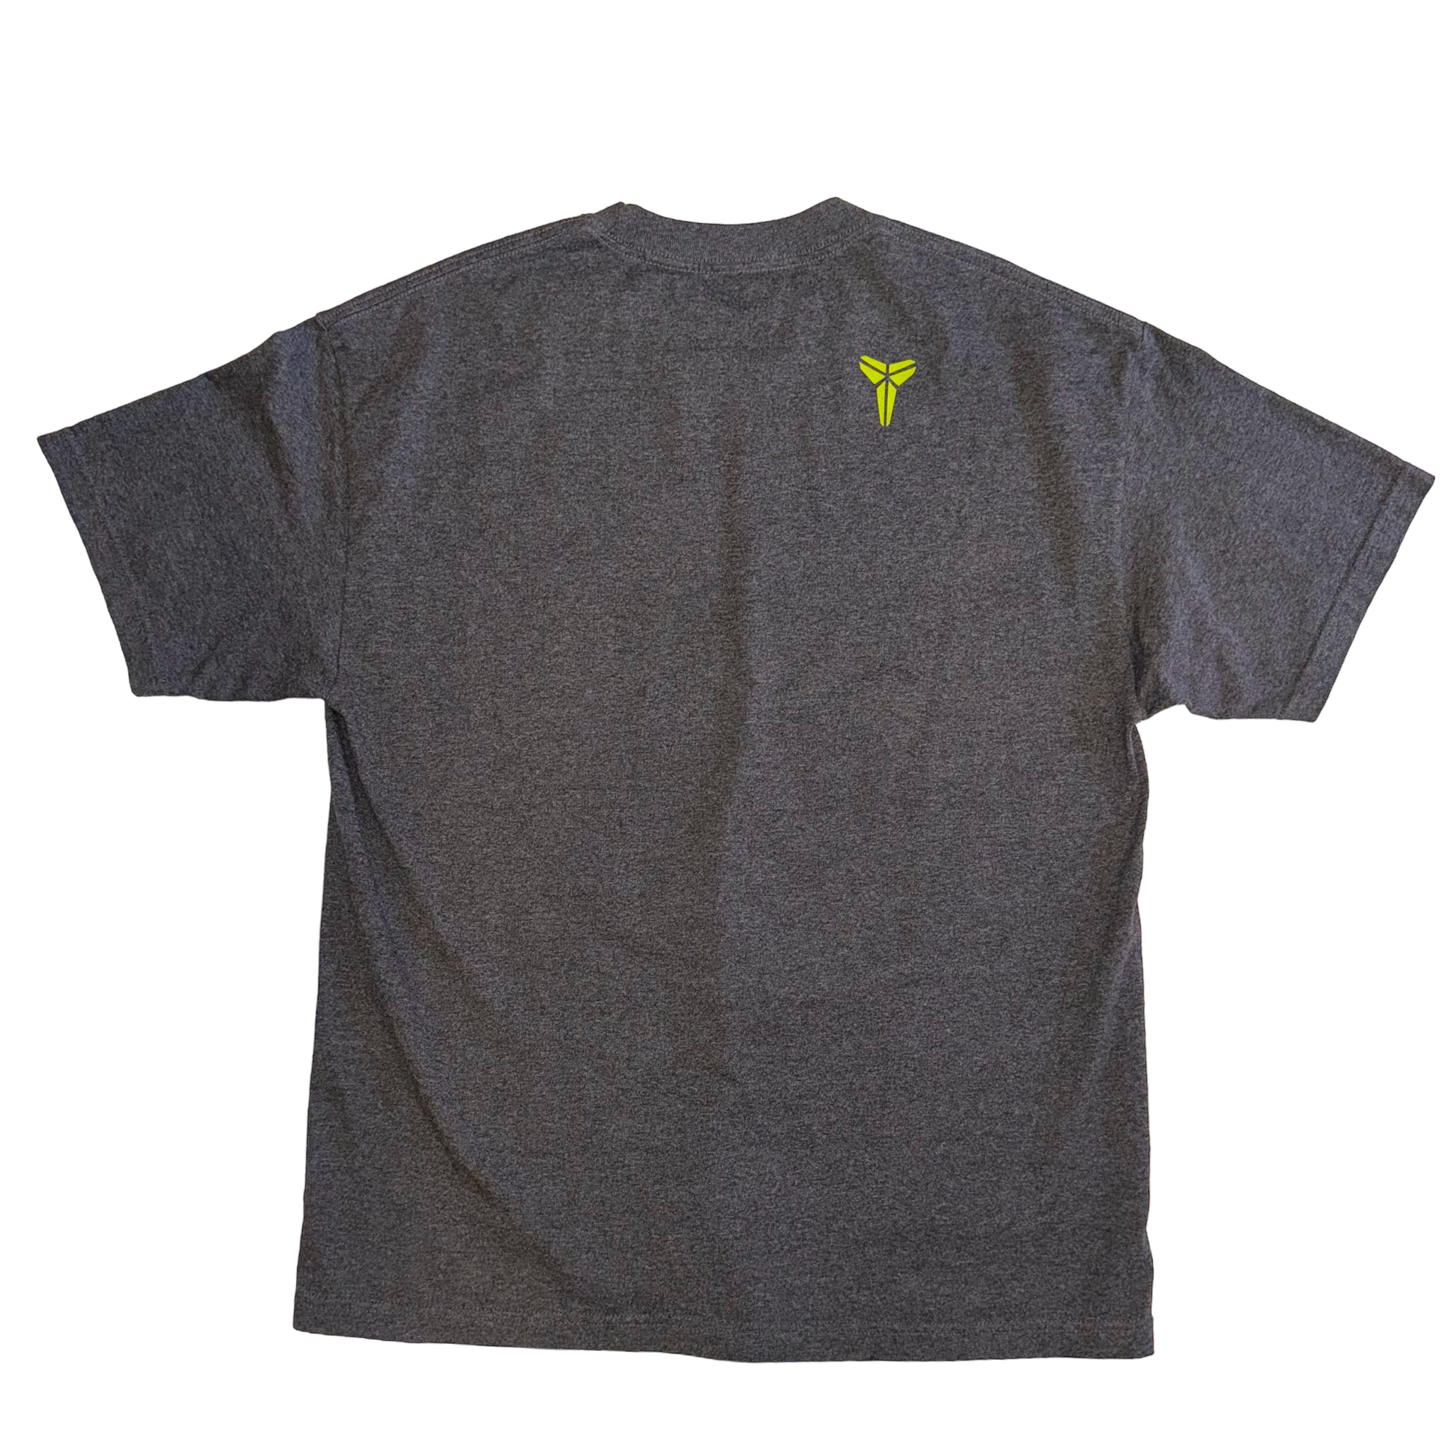 Nike - LA Kobe Bryant Puppet Hands Vintage Y2K Graphic T-Shirt